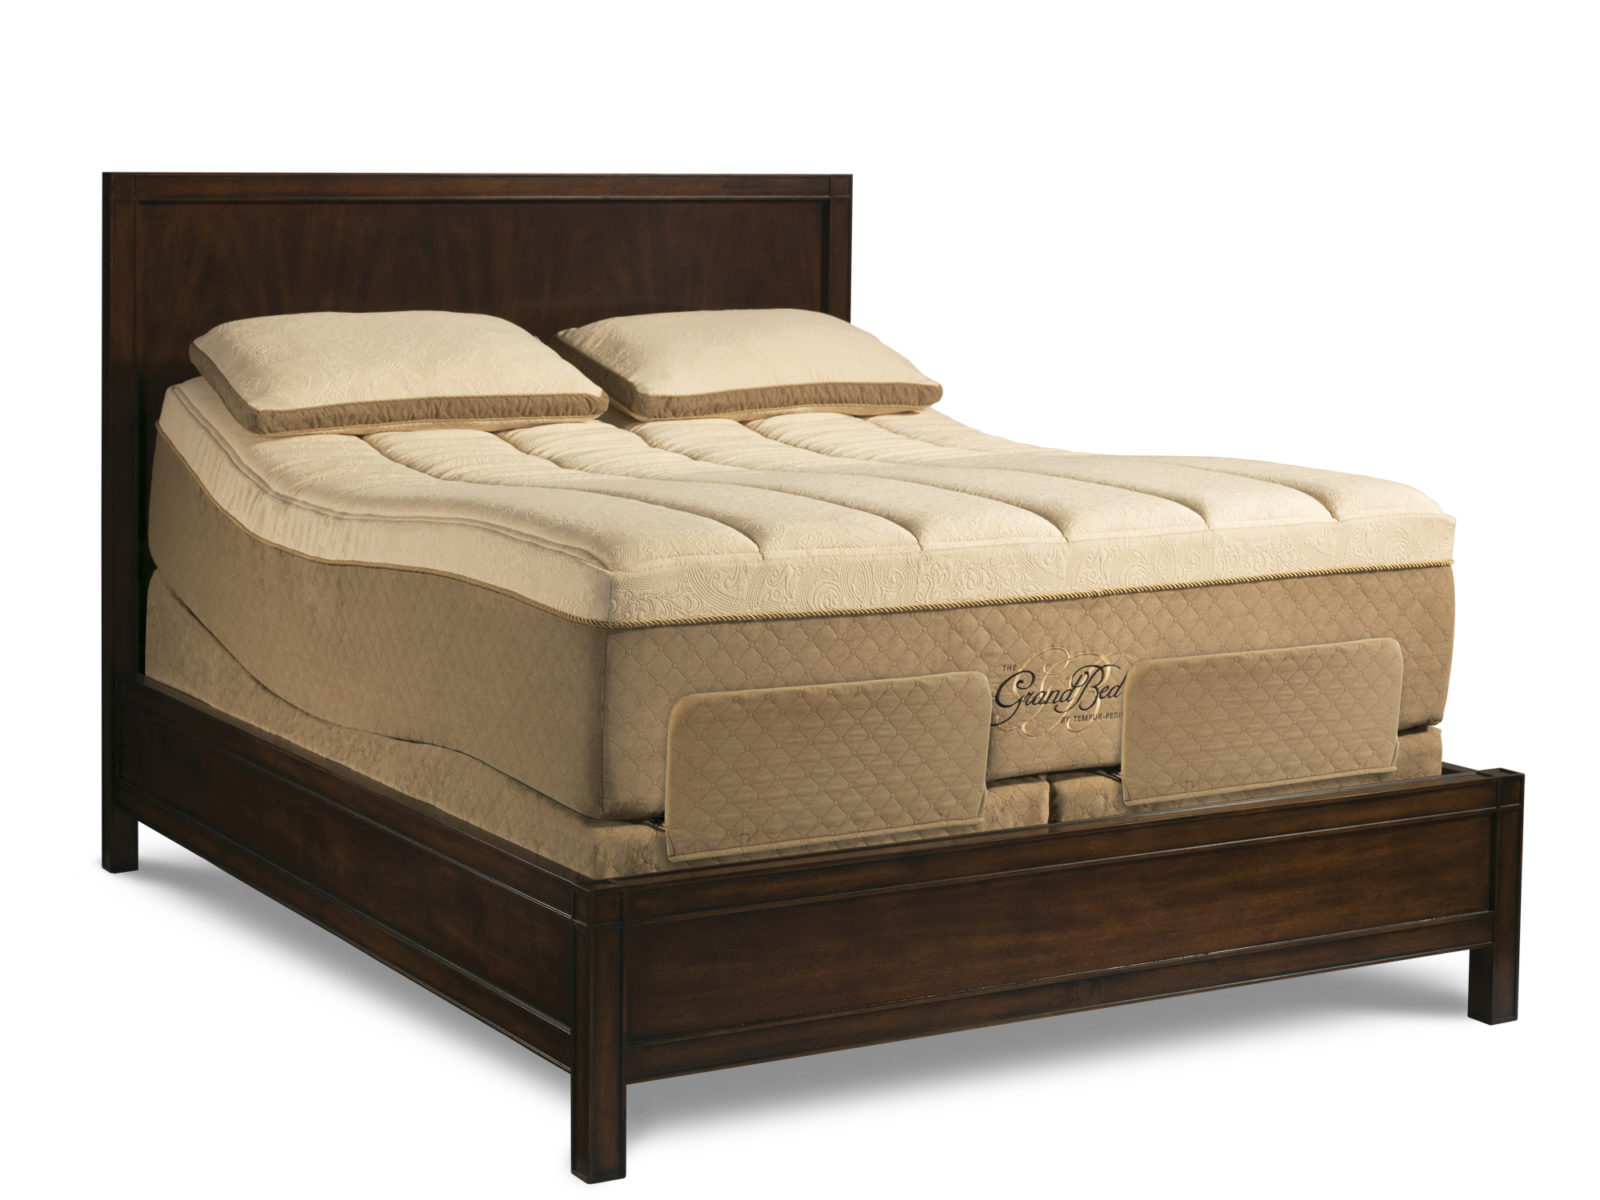 contour collection sophia mattress reviews